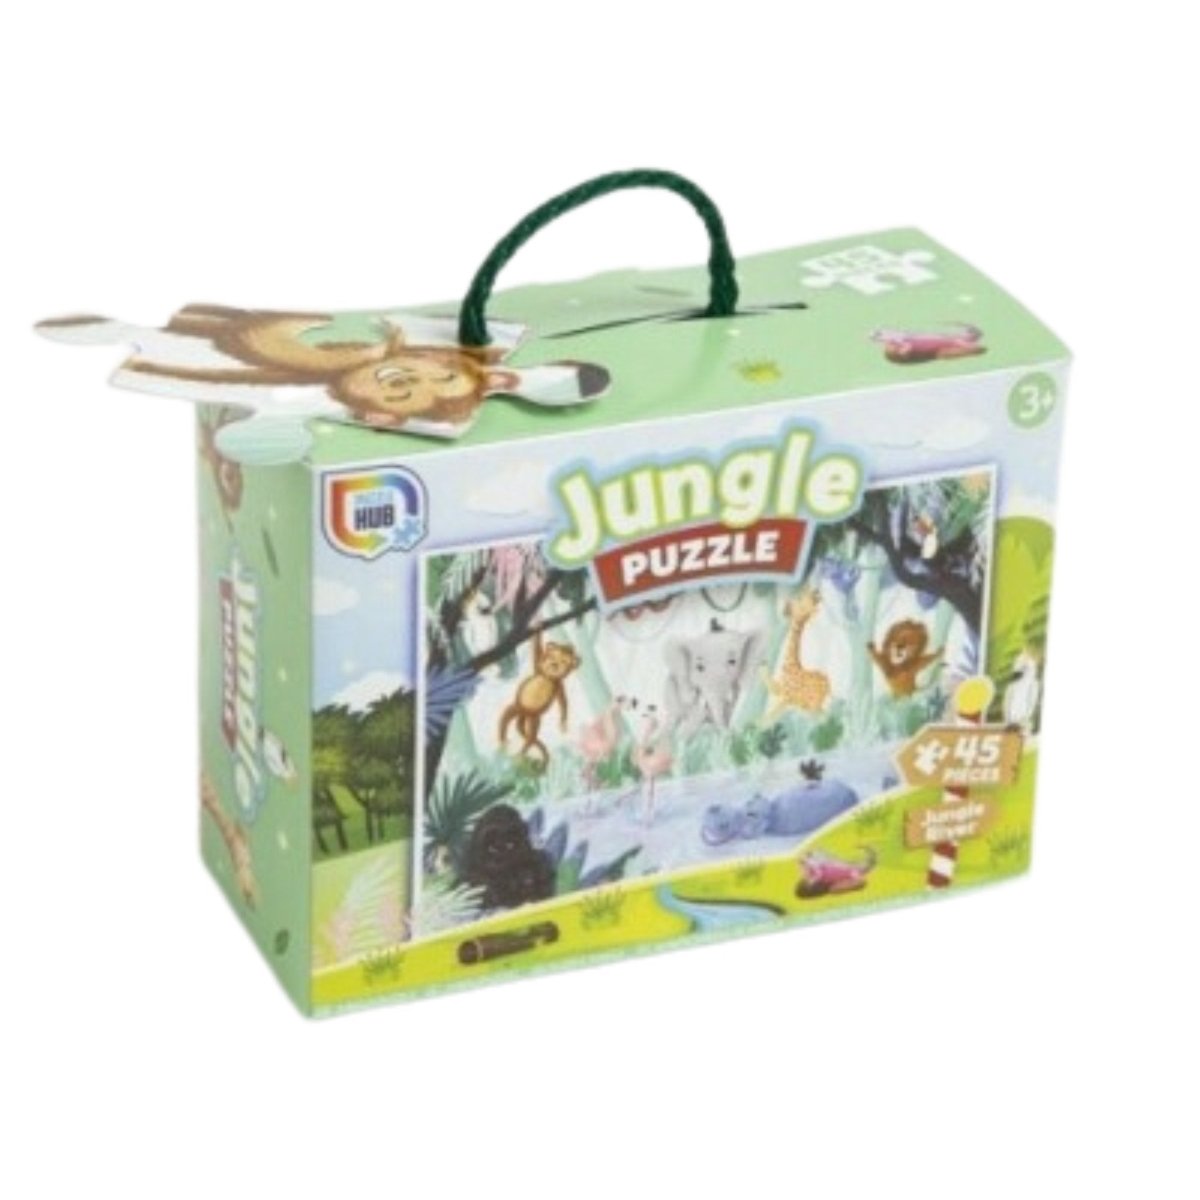 Jungle Puzzle 45 Piece - Kids Party Craft